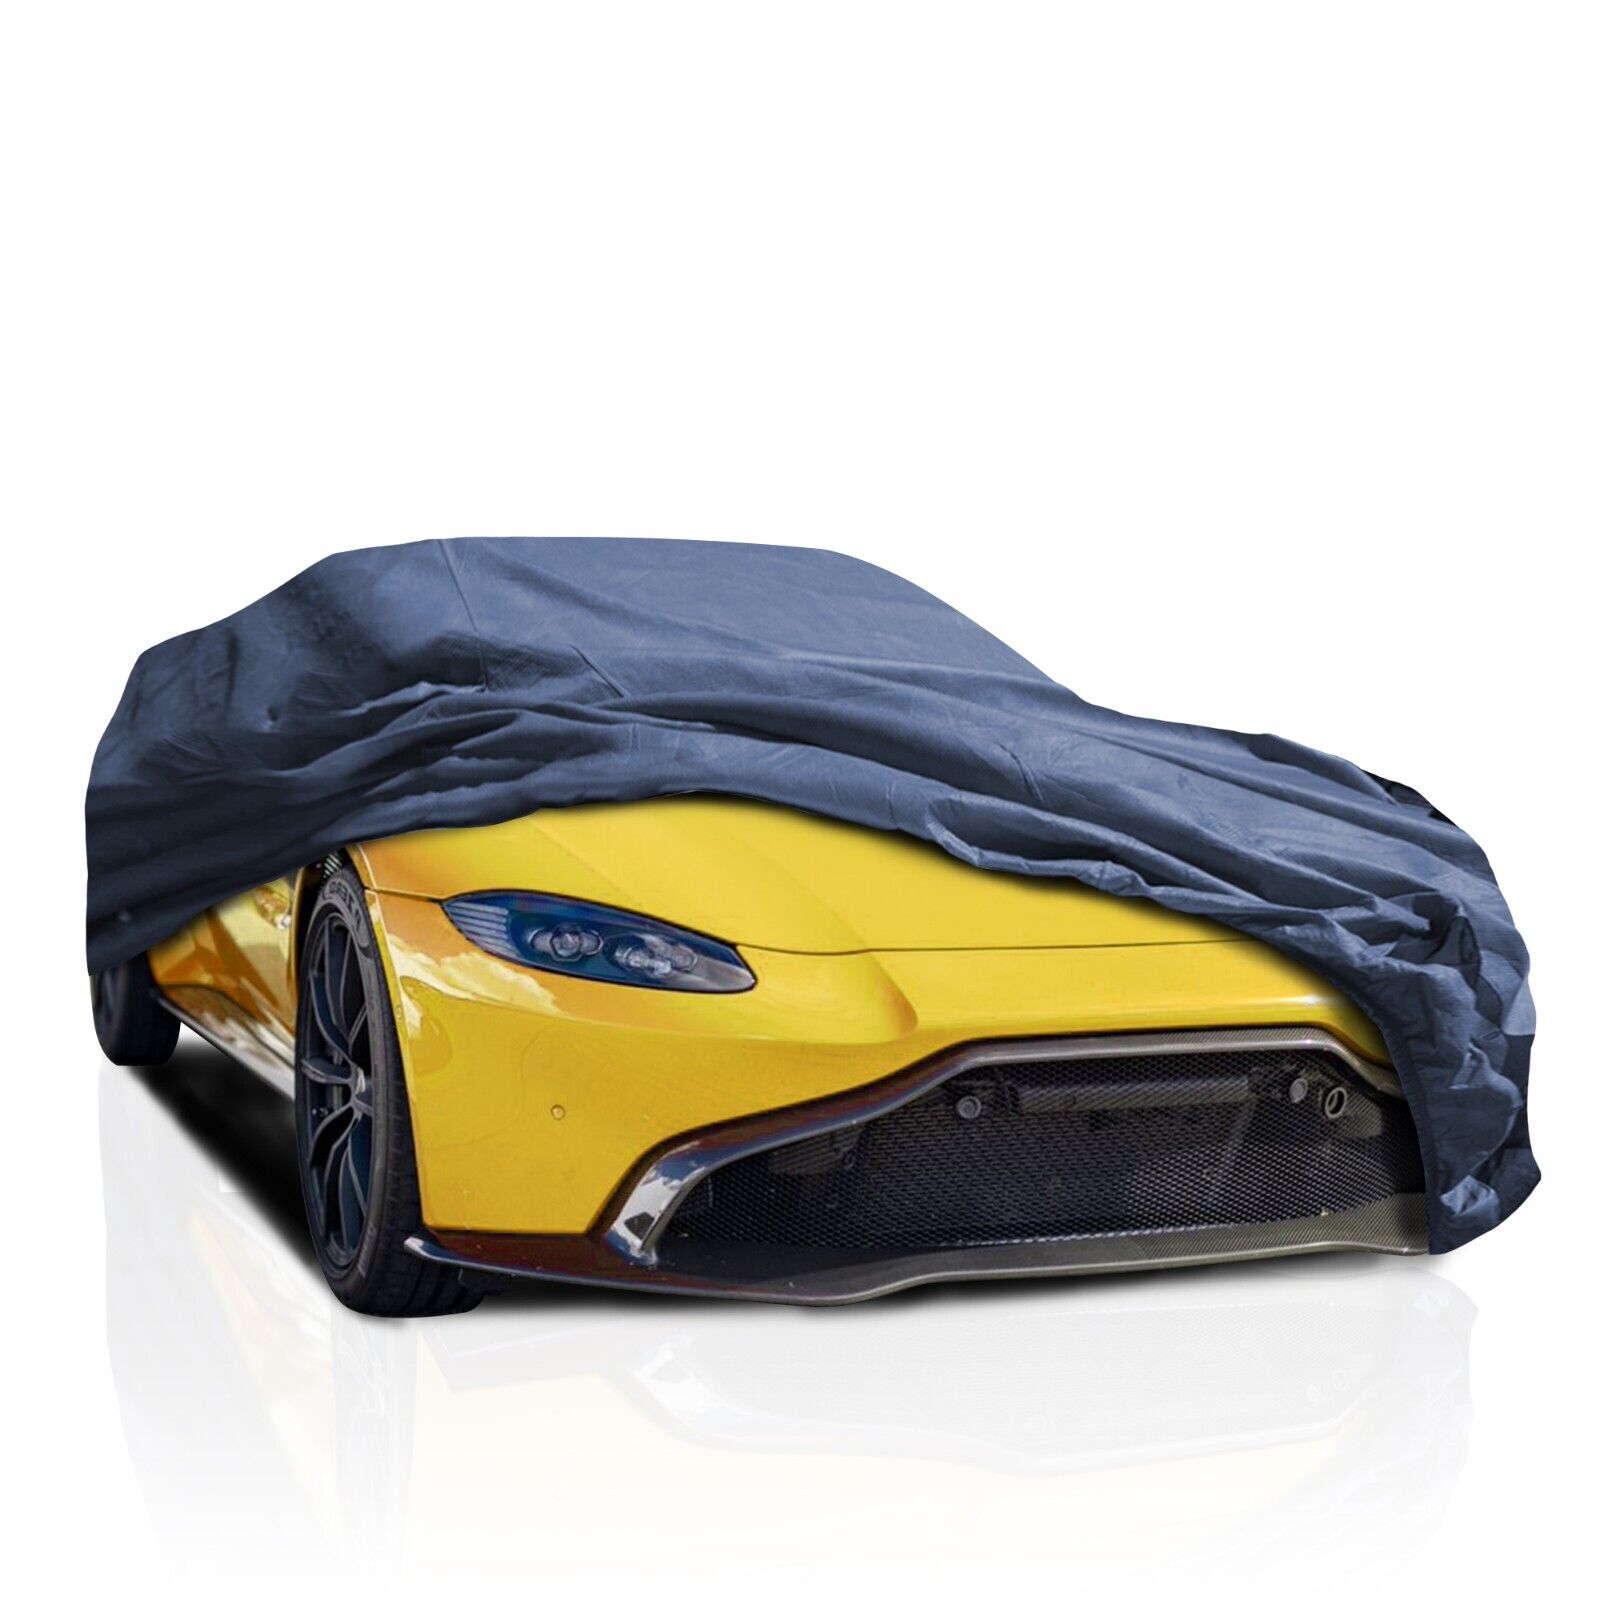 [CCT] 4 Layer Car Cover for Aston Martin Rapide Fastback 2017 2016 2015 2014